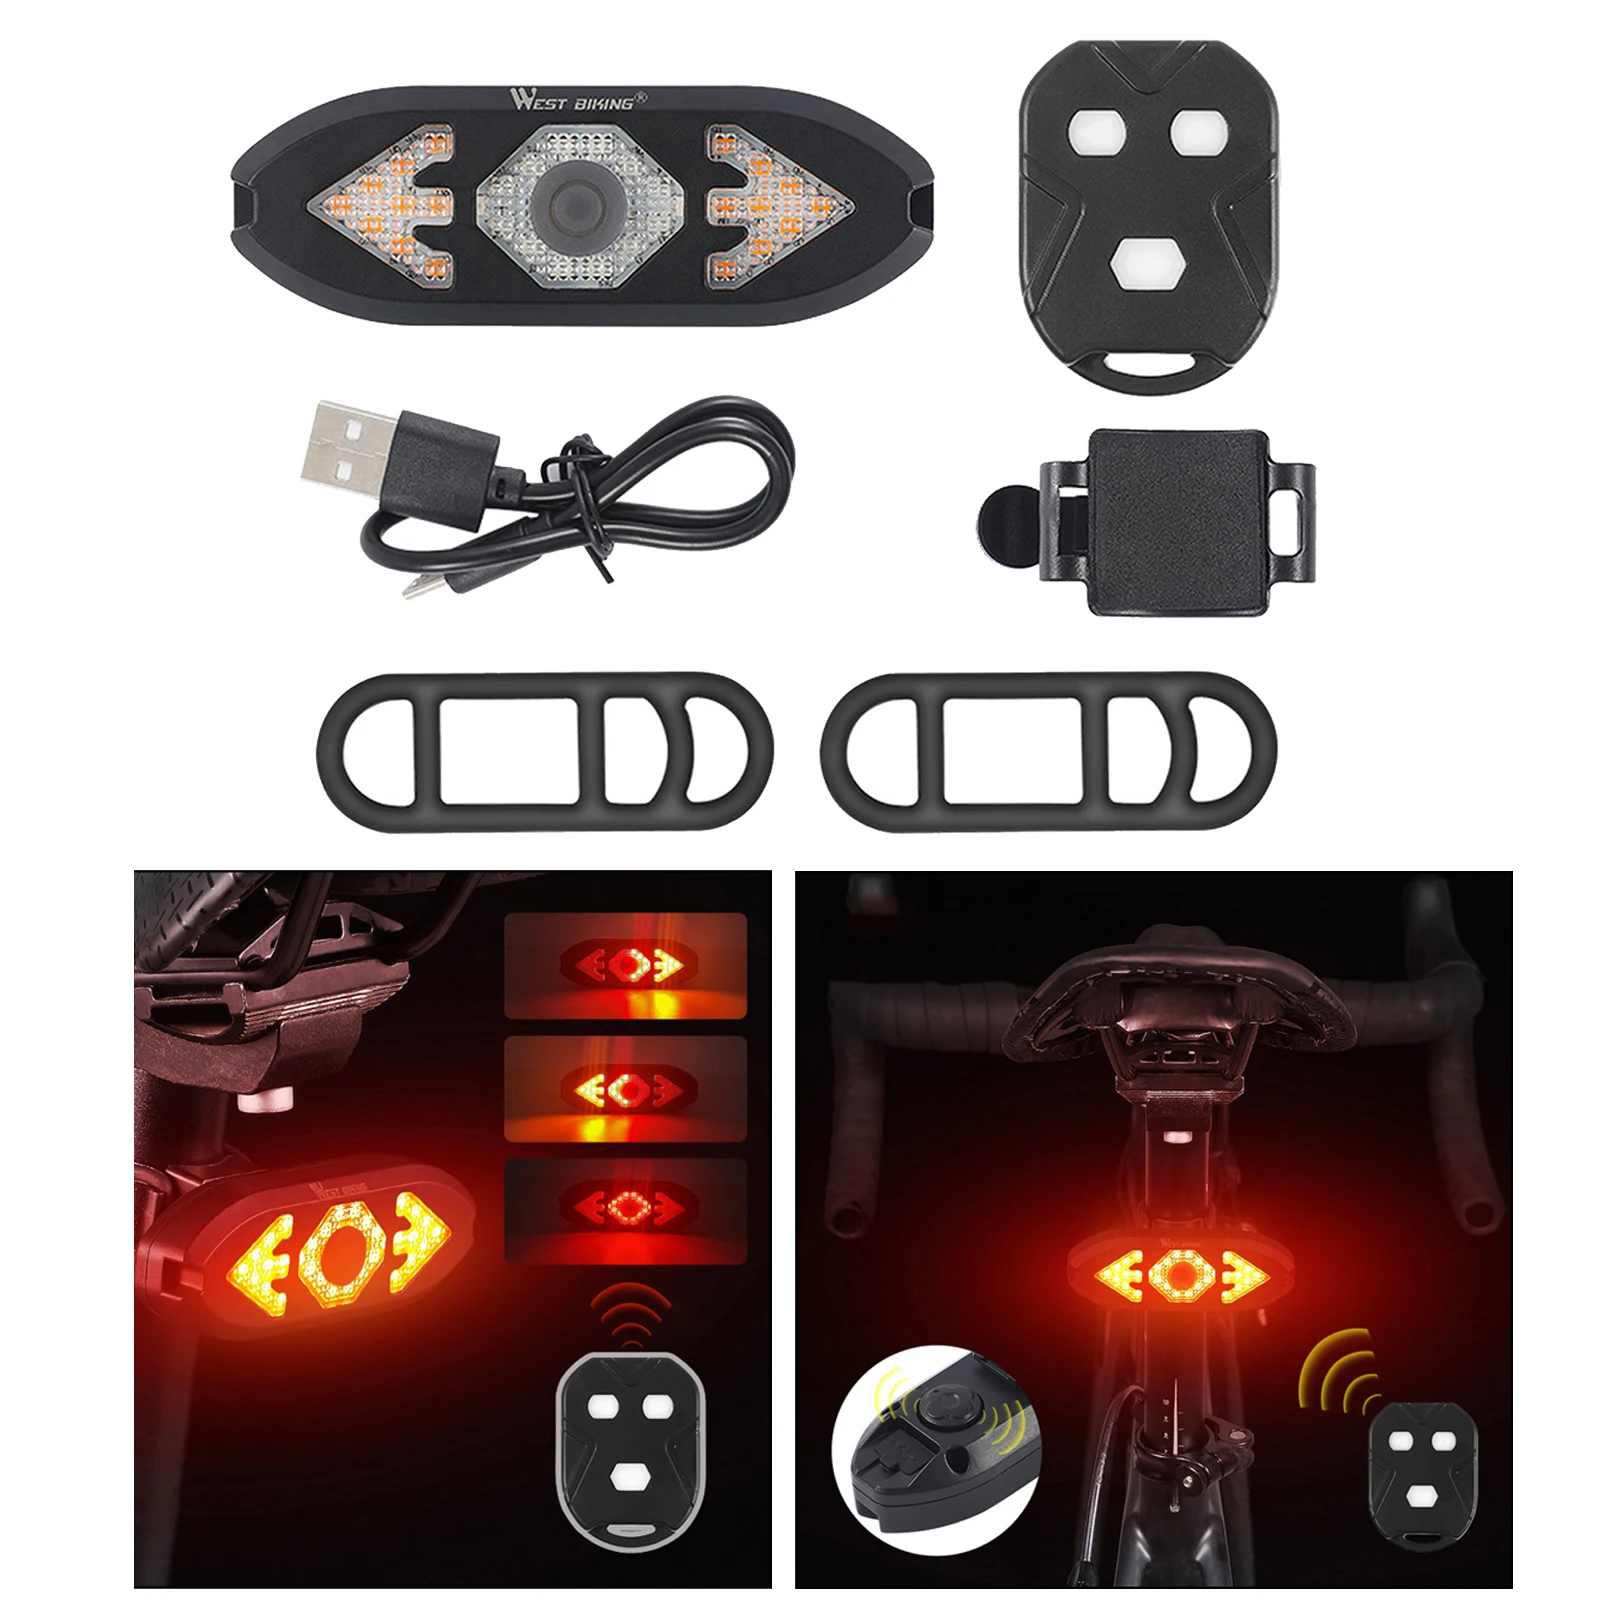 5 Modes Bike Tail Light Turn Signals Wireless Remote Control Mountain Bike Tail Light Waterproof Bicycle Flashing Taillight